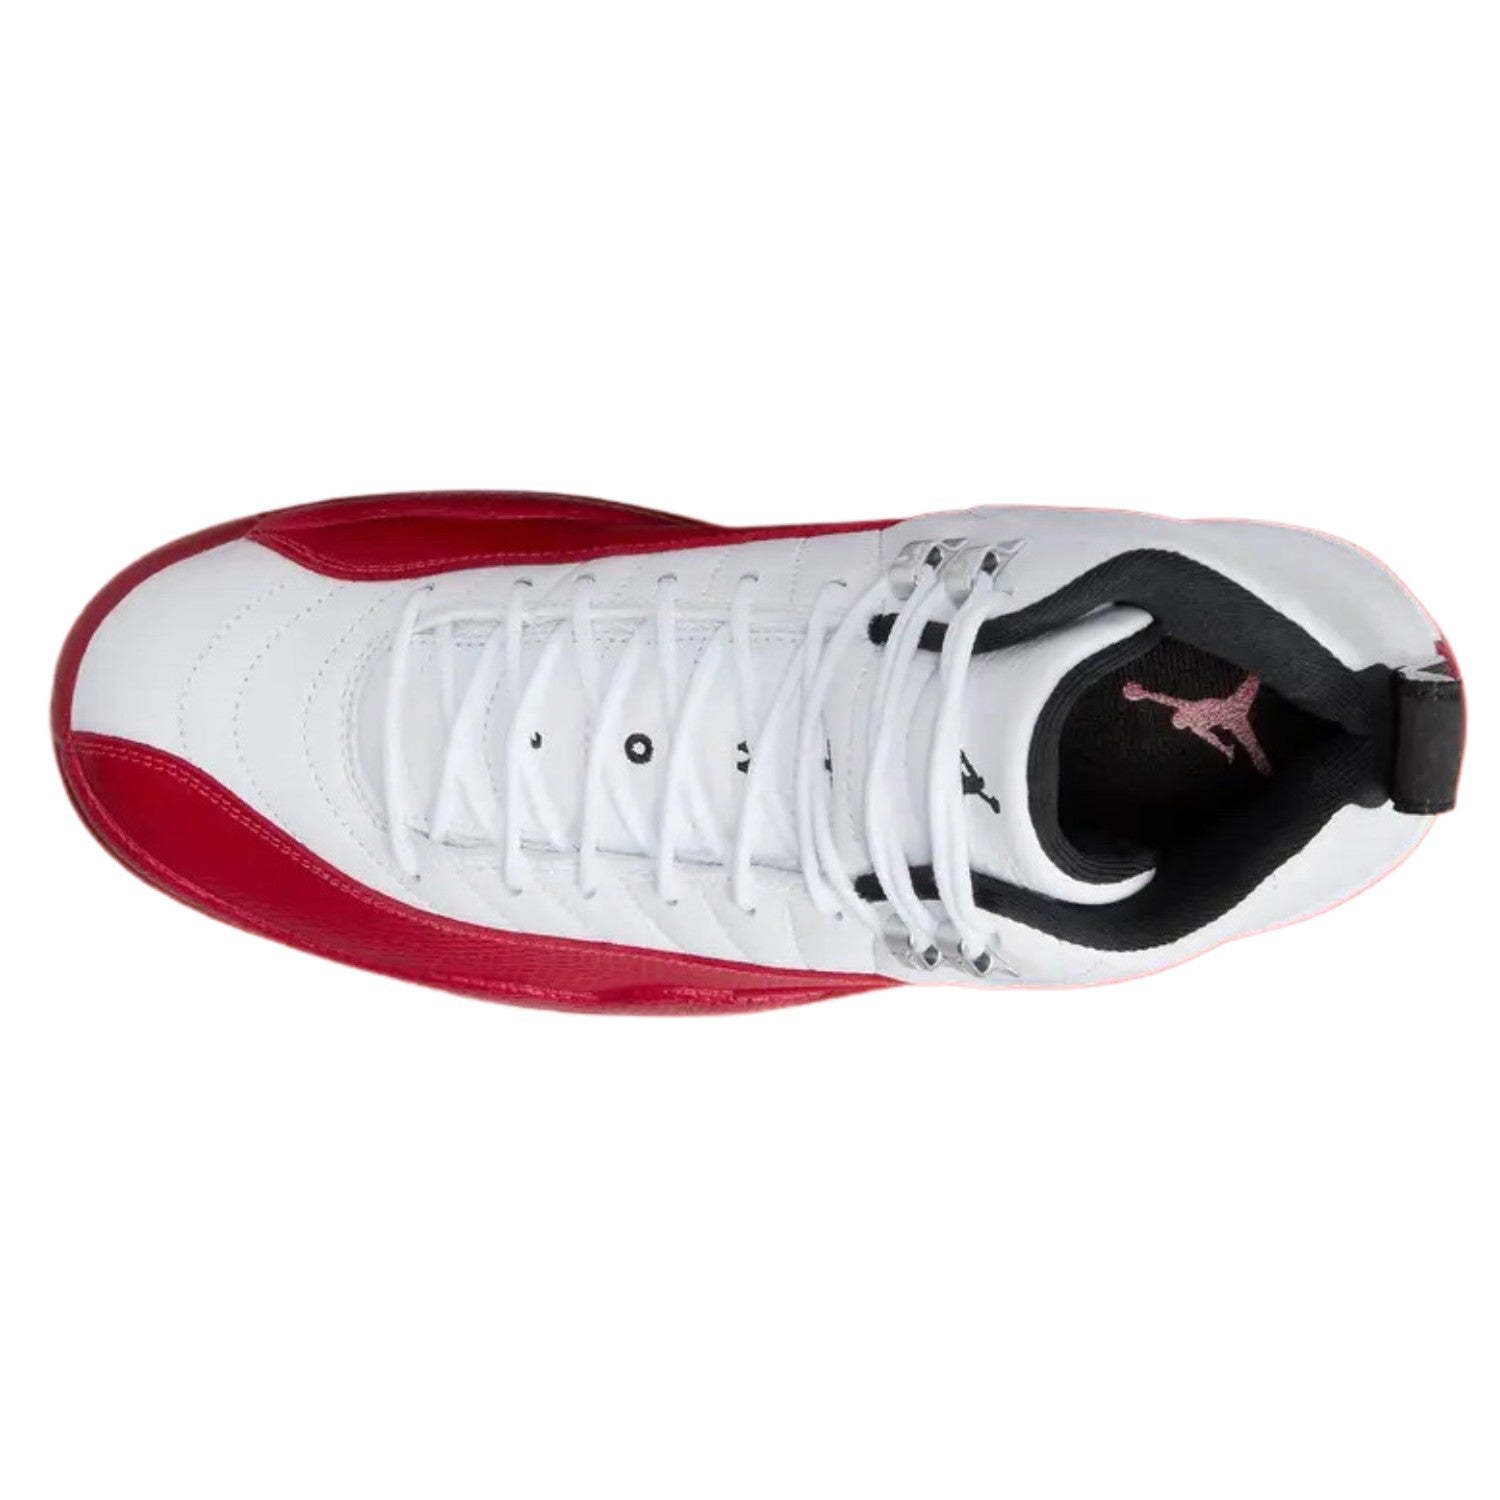 Air Jordan 12 Retro "Cherry" Mens Style : Ct8013